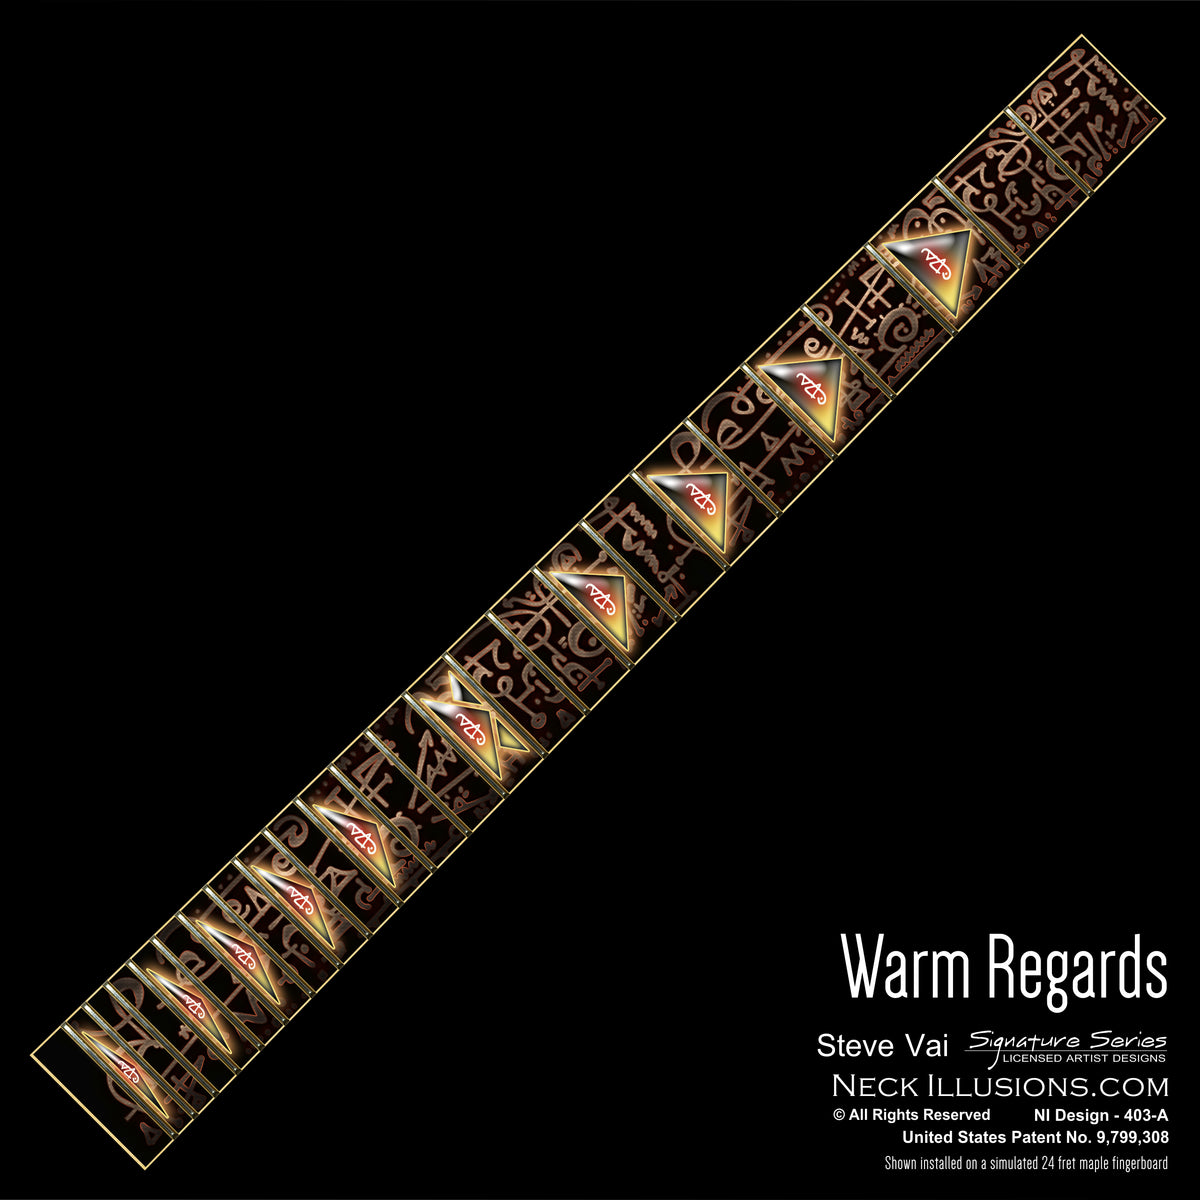 Steve Vai - Warm Regards